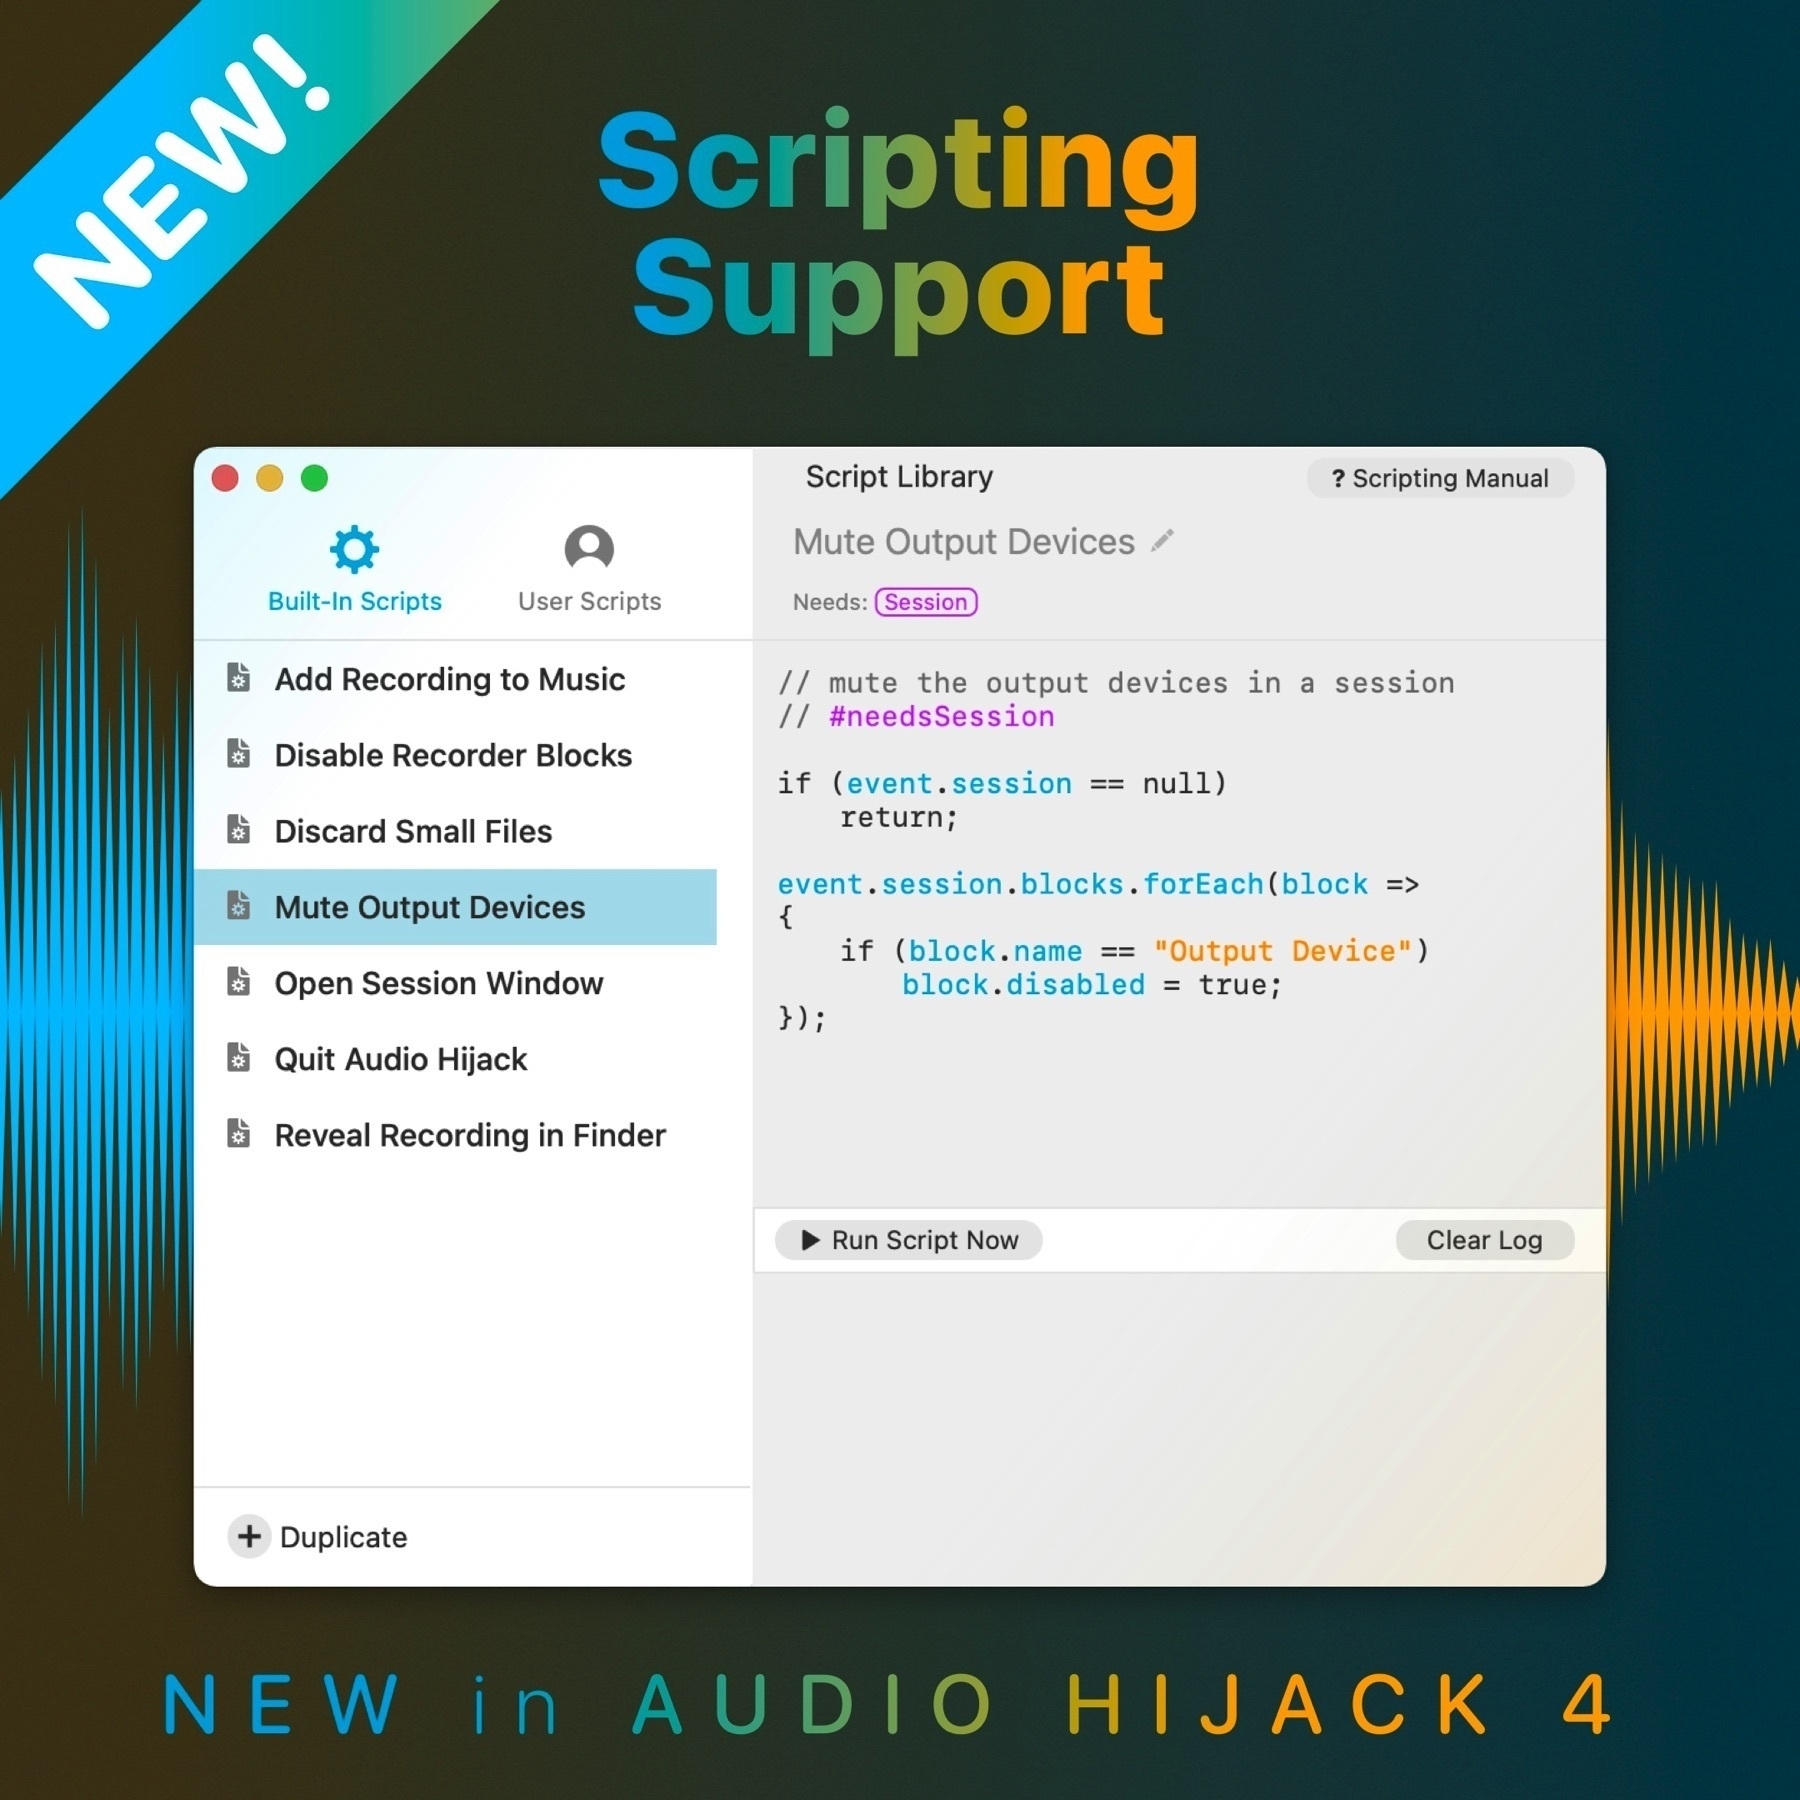 Audio Hijack 4’s new Script Library window